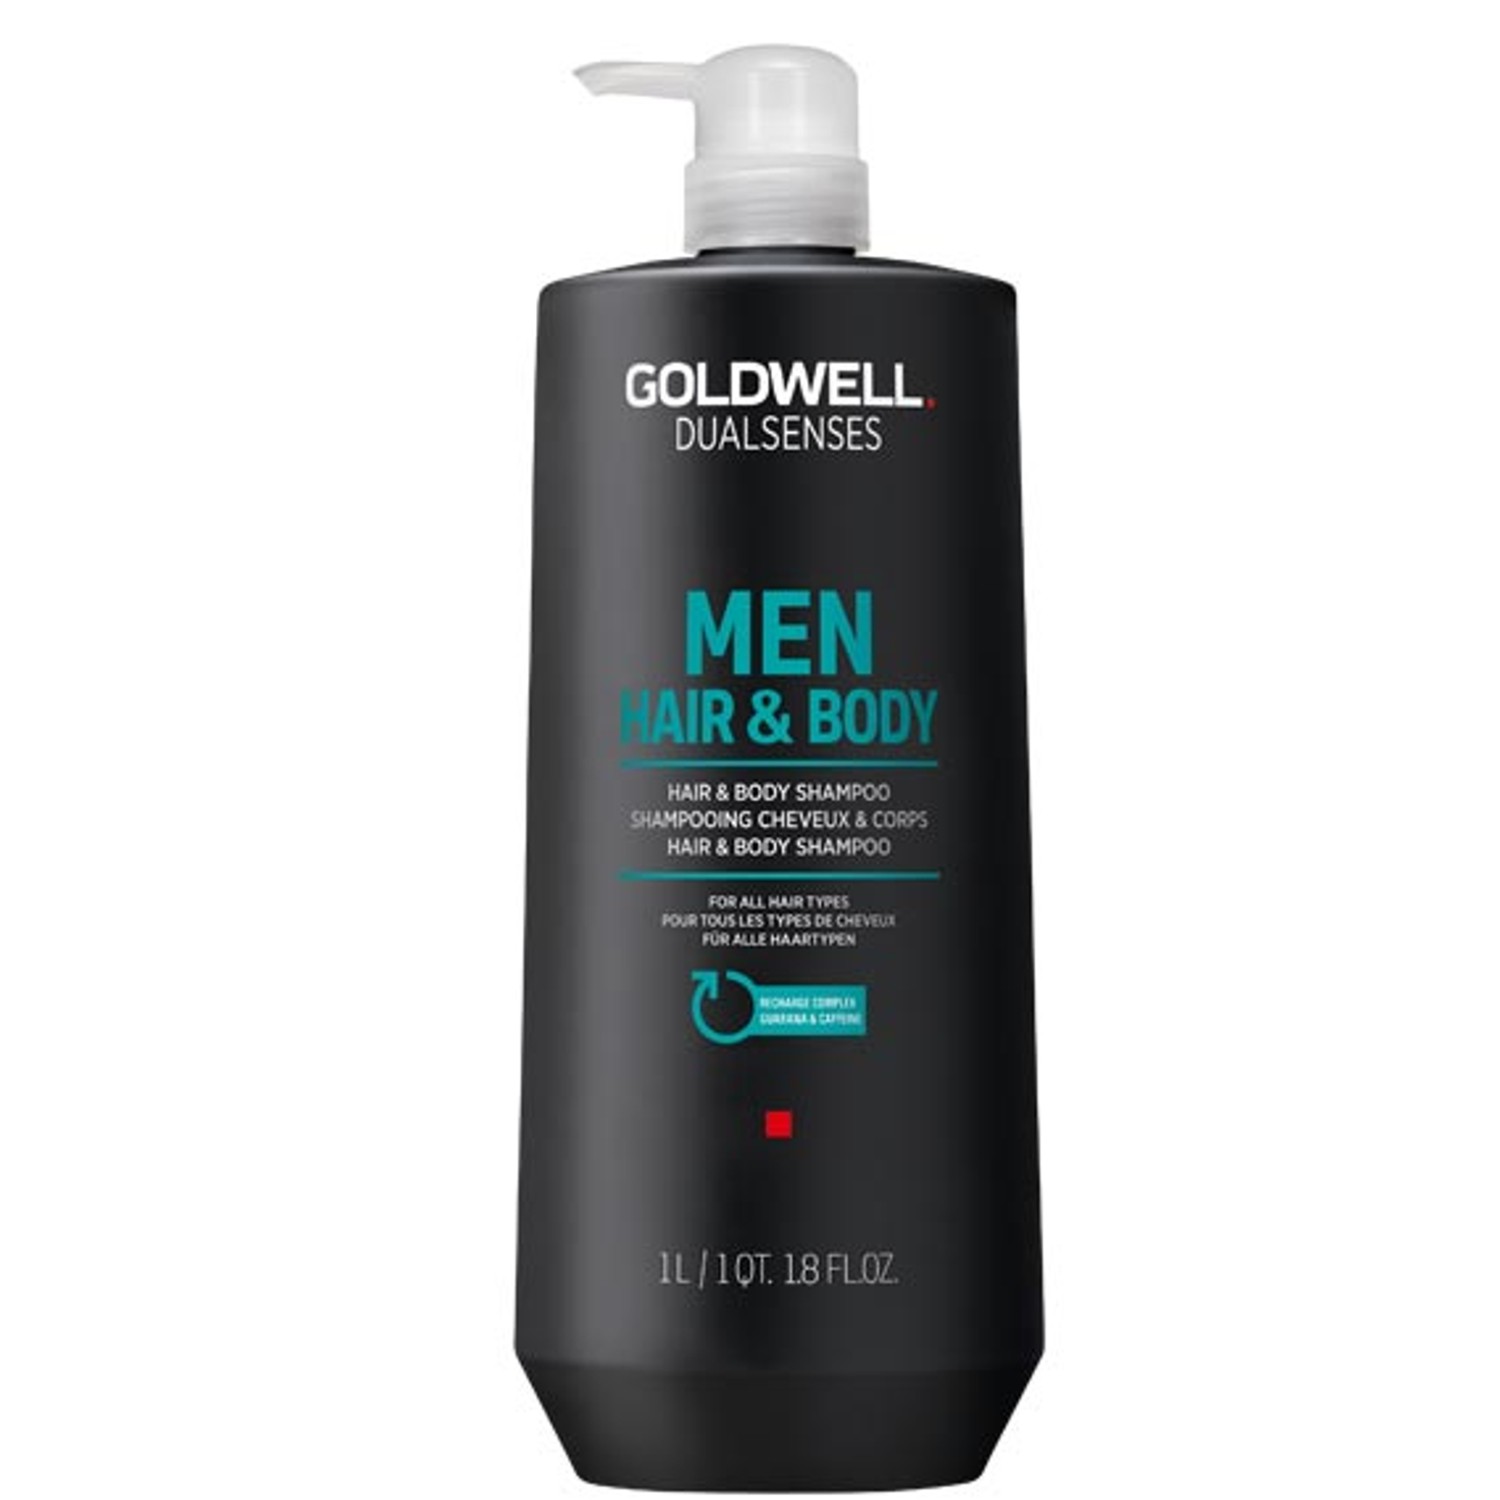 GOLDWELL Dualsenses Men HAIR & BODY SHAMPOO 1 L